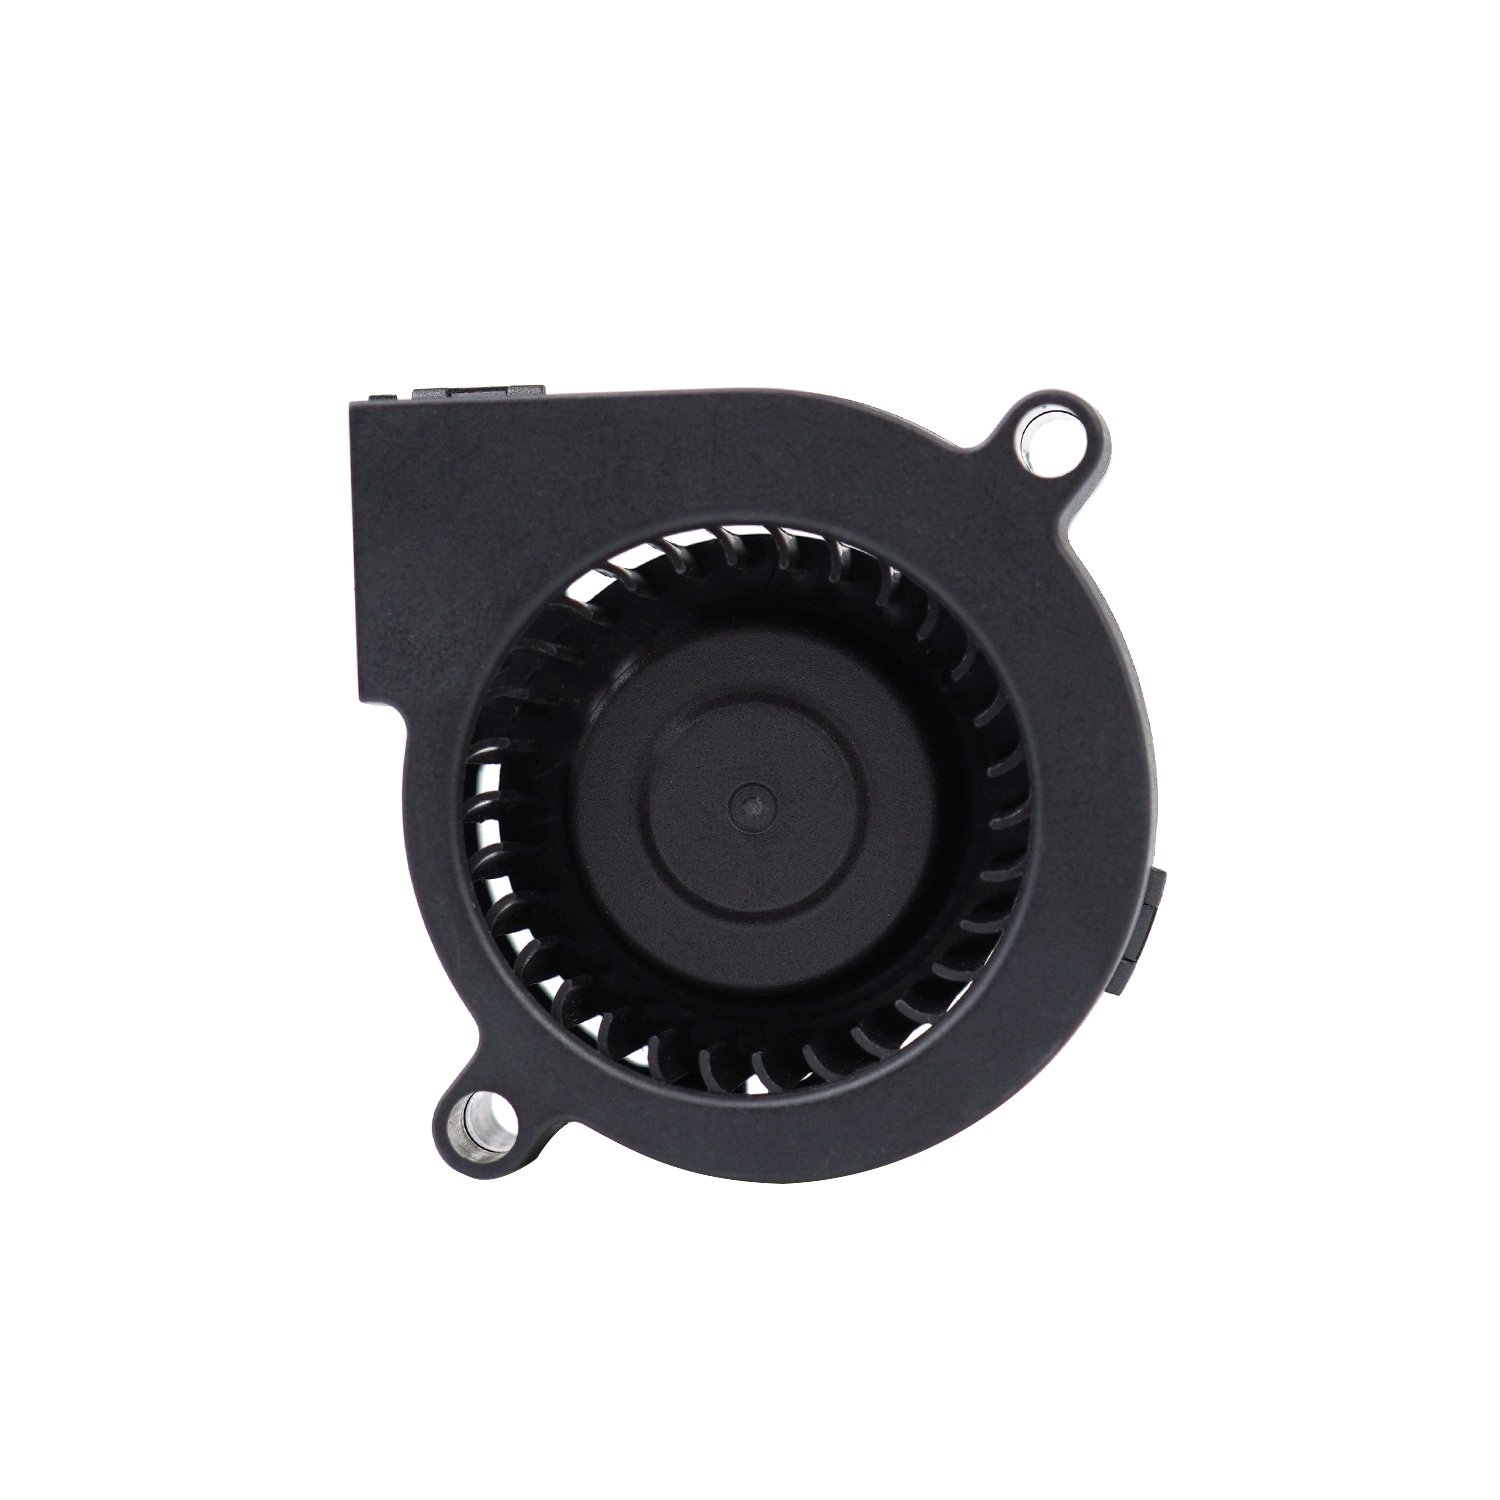 4008 40mm 5v high speed mini centrifugal fan